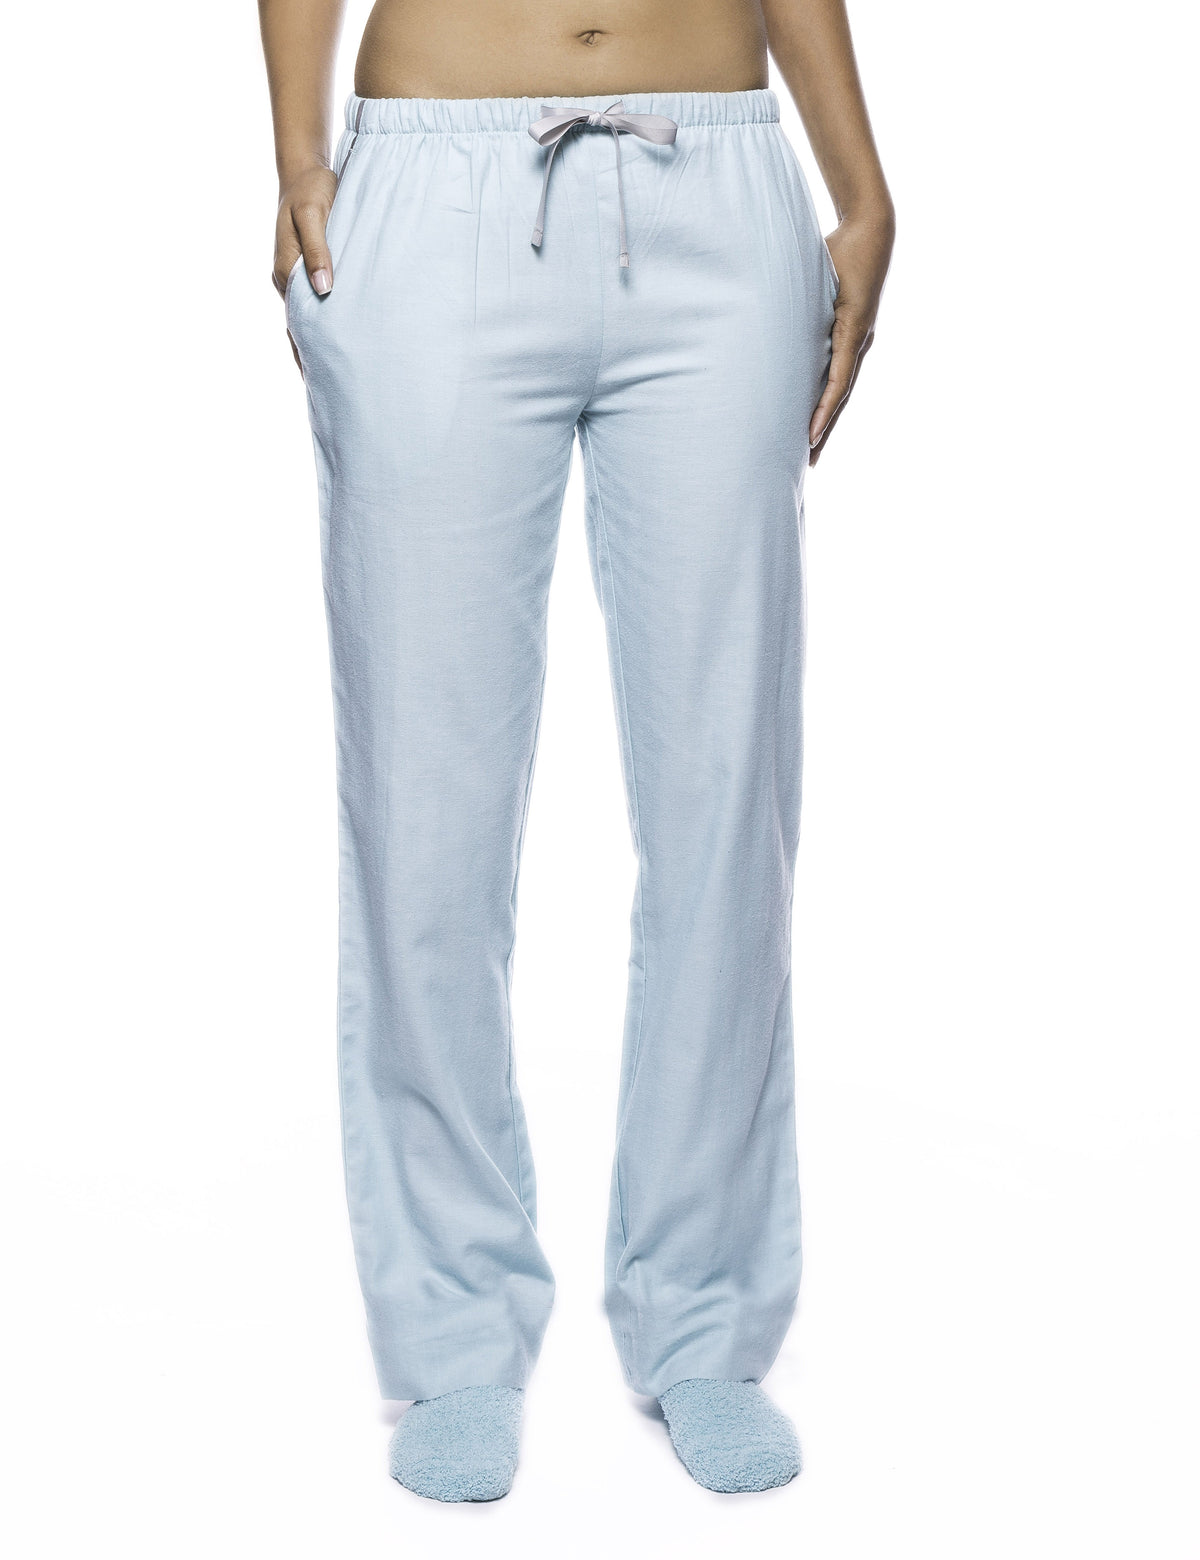 Adult Warm & Fuzzy Pajama Bottoms Pants Wholesale HF969